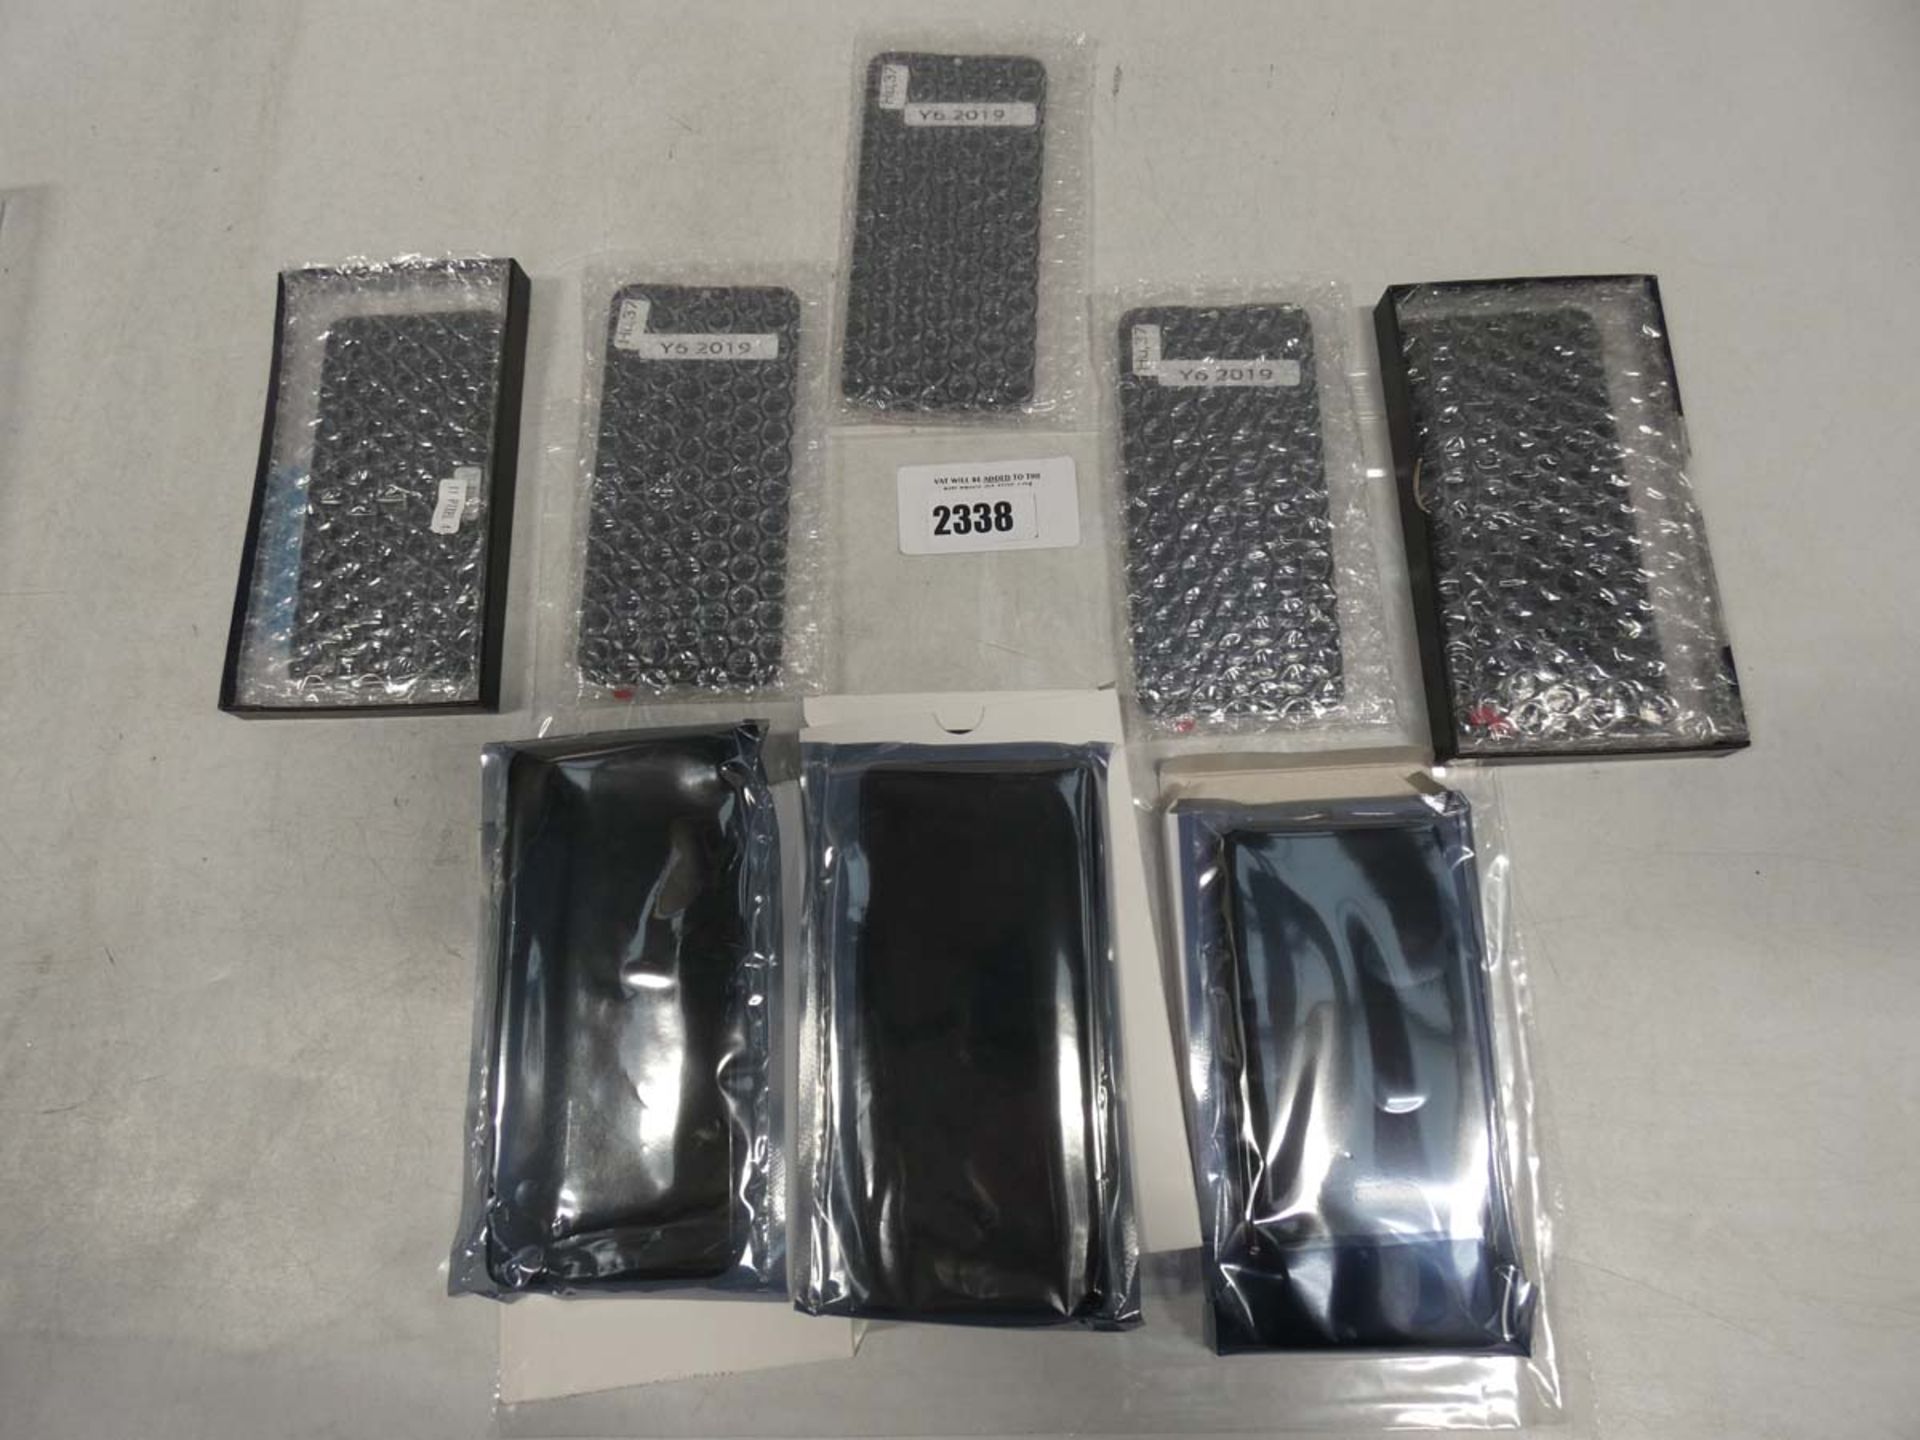 Various spare smartphone screens